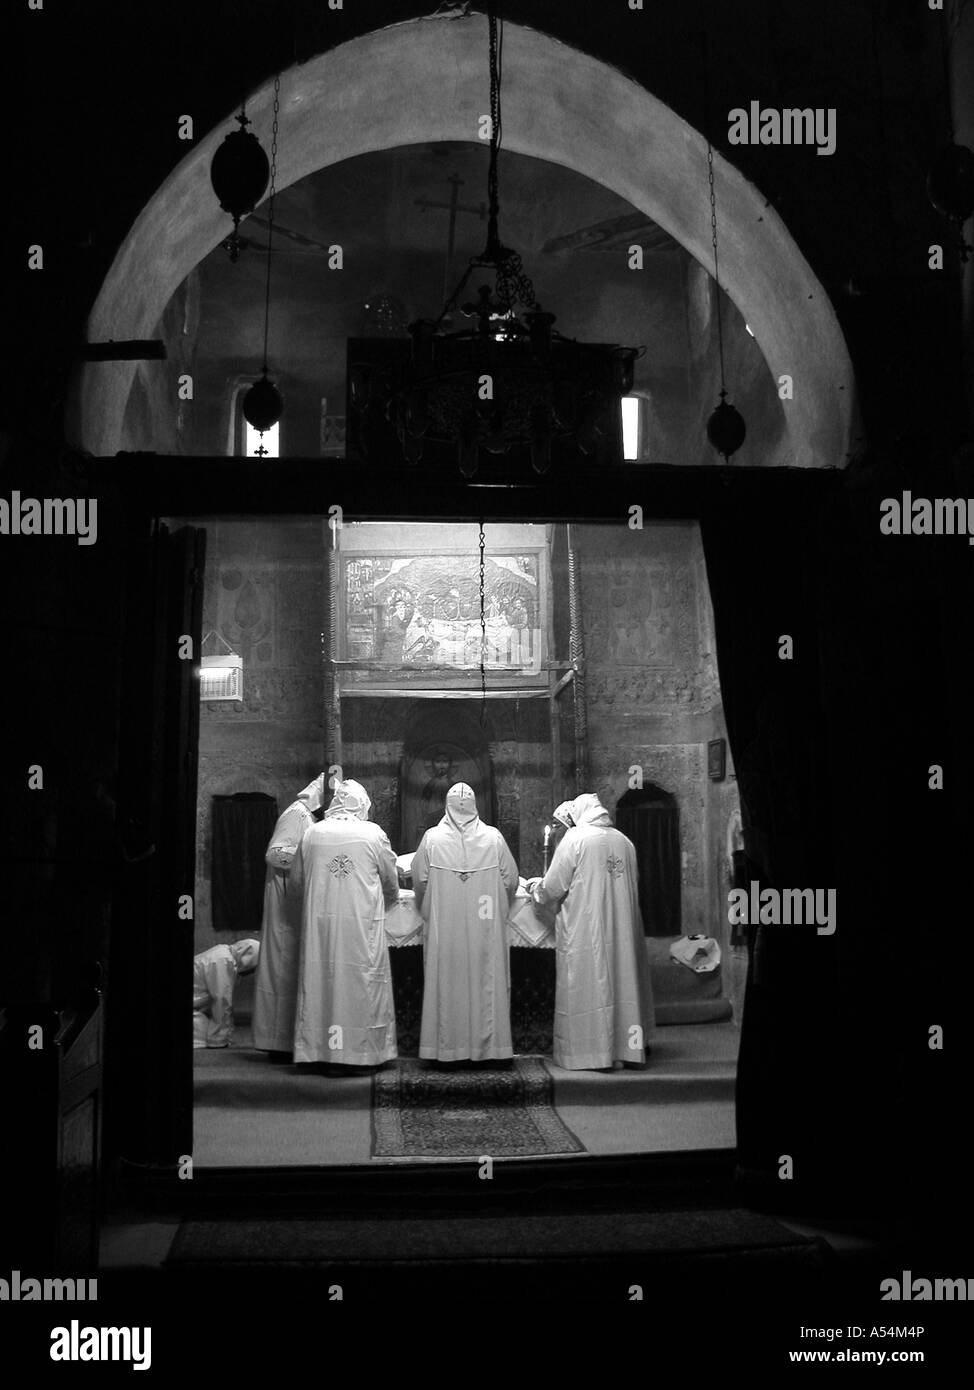 Painet ip1624 8075 black and white egypt monks celebrating mass virgin church sourian coptic orthodox monastery wadi natrun Stock Photo